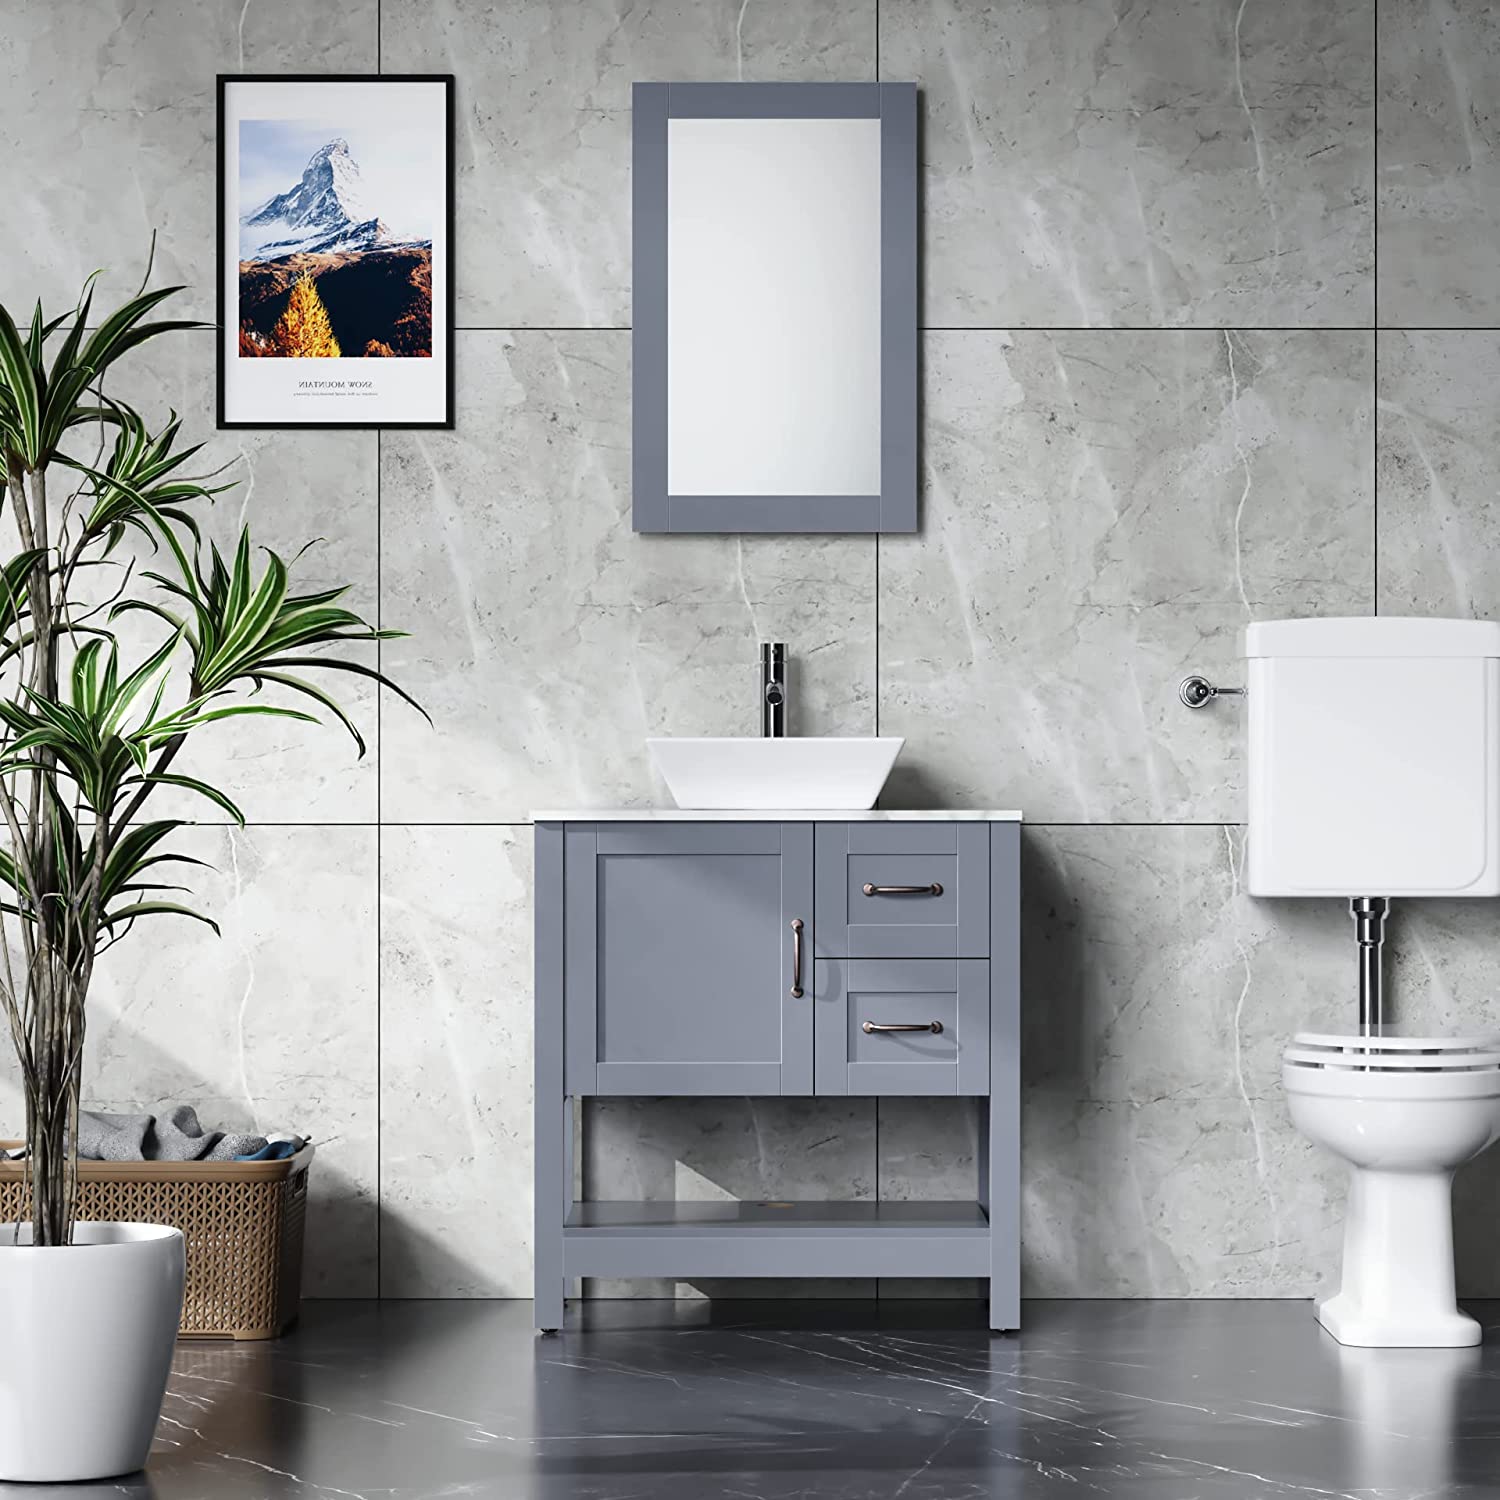 HOMECART Easy Install Bathroom Vanity & Sink Combo, 30-Inch